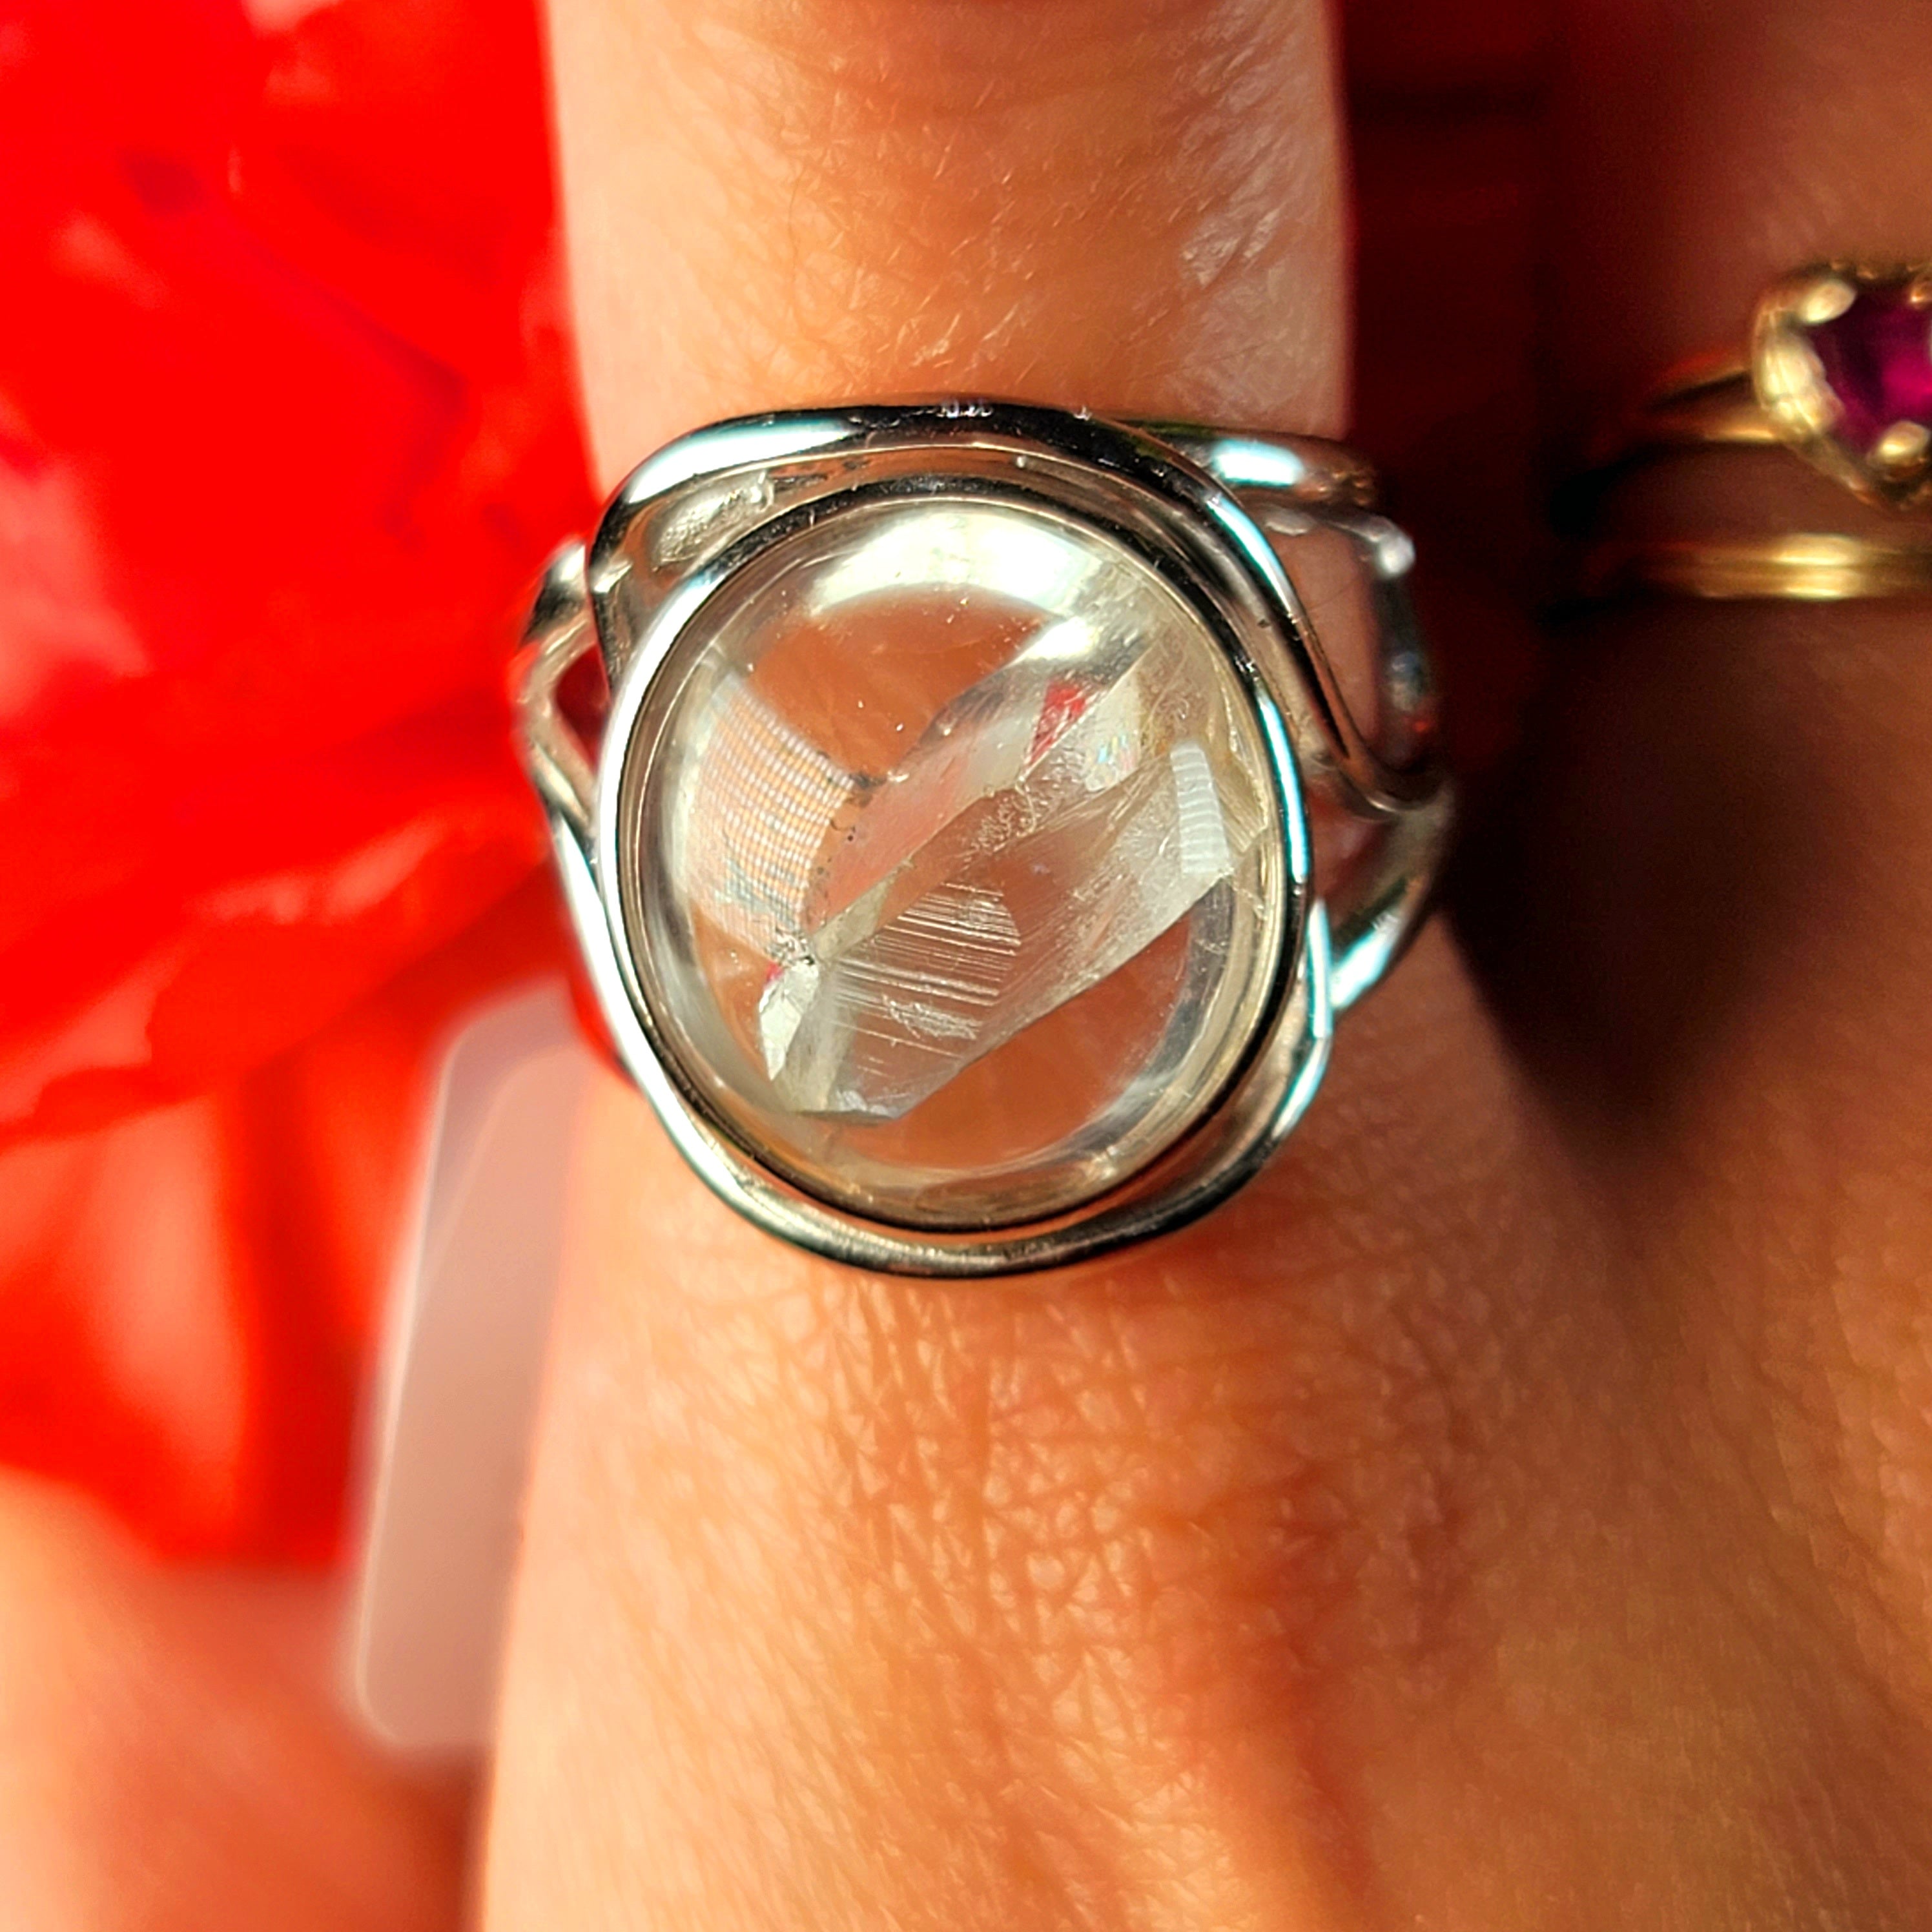 Manifestation Quartz Inner Child Finger Cuff Adjustable Ring .925 Silver for Manifesting Anything you Desire